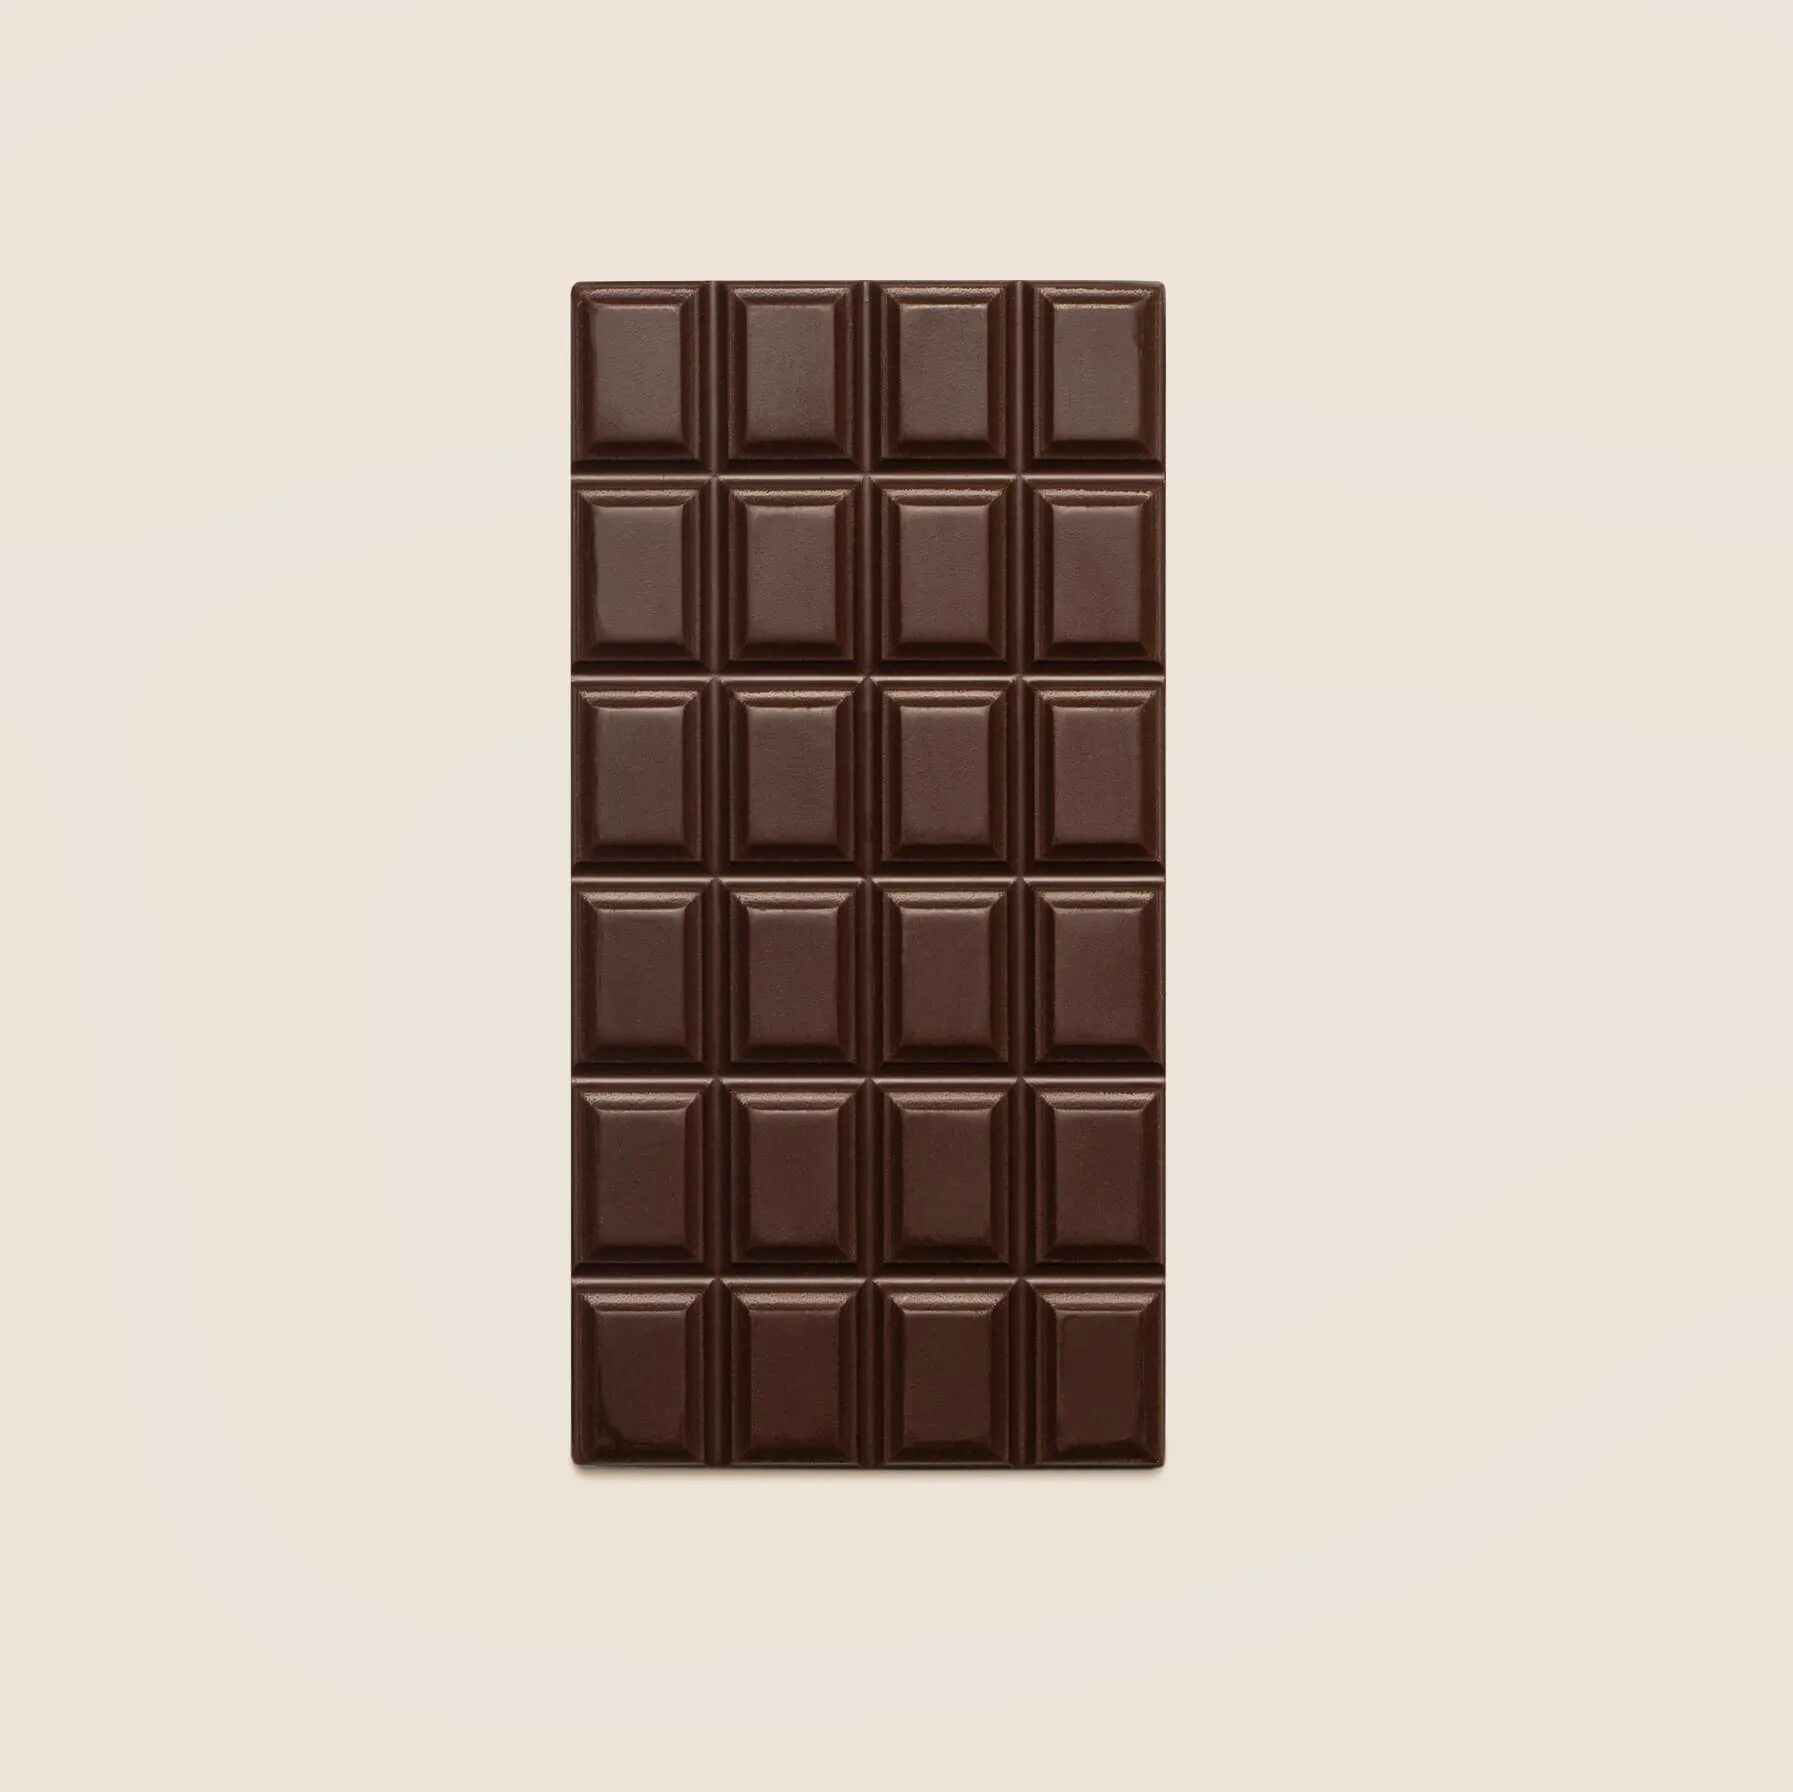 Шоколад 20 гр. Шоколад Bob с кешью 50г. Bob шоколад темный. Bob шоколад темный 20 грам. Шоколад без сахара "темный" Bob.